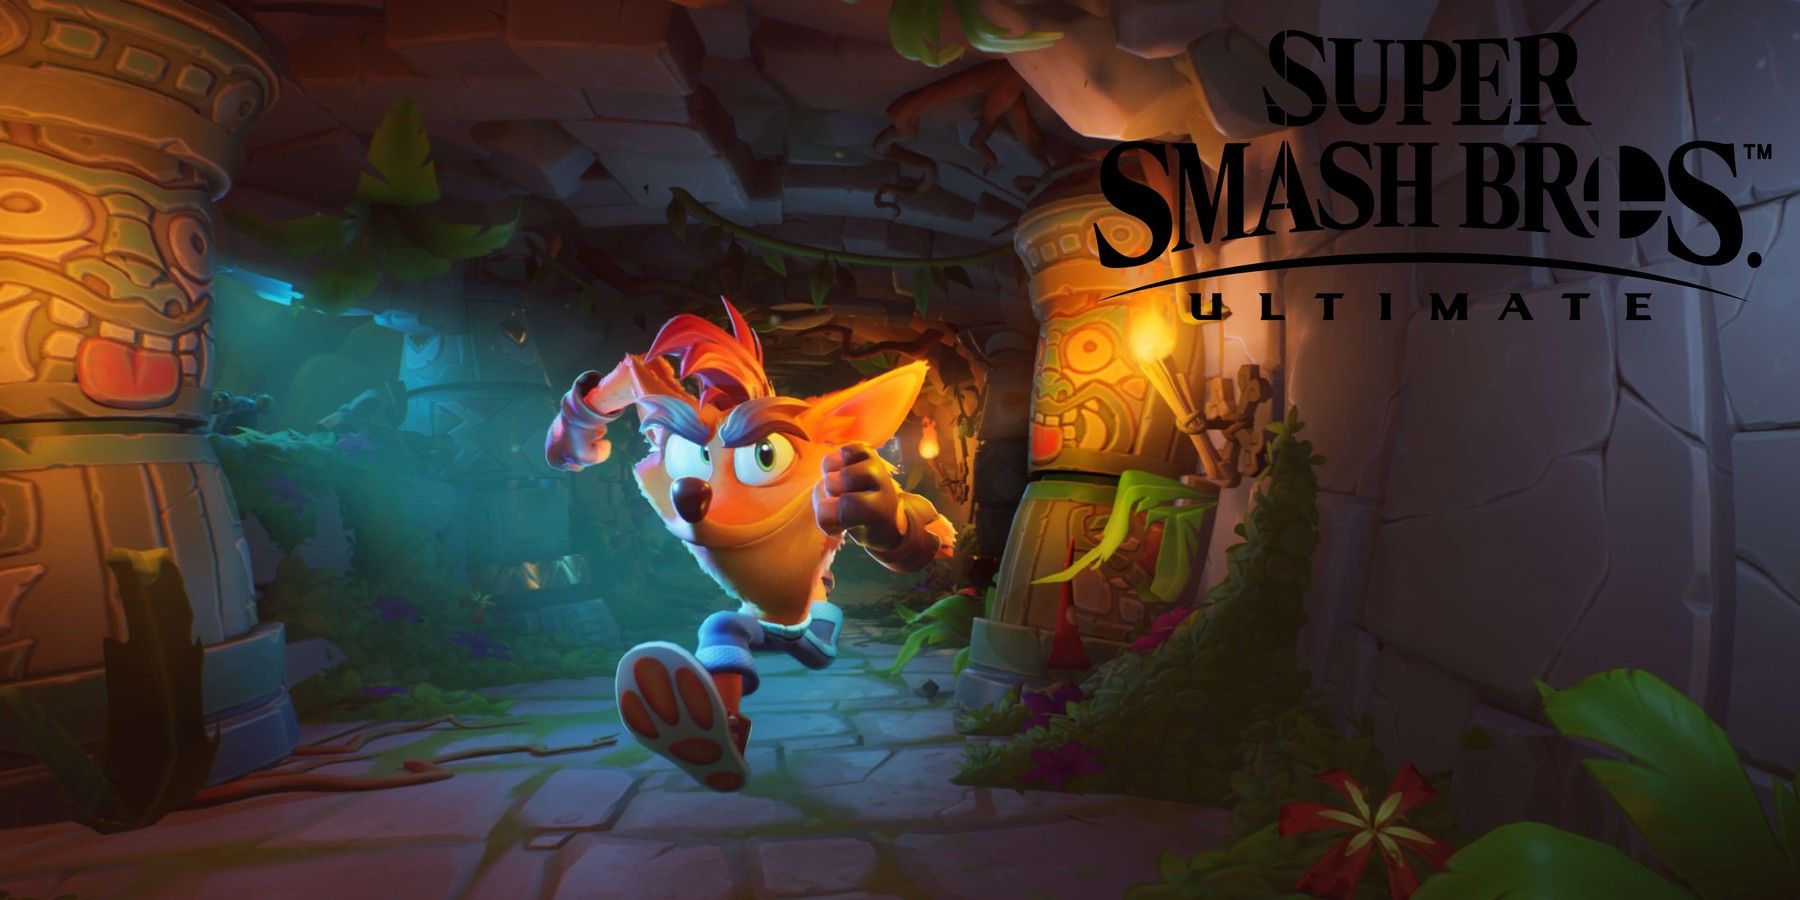 Someday..Crash Bandicoot for Smash, Super Smash Brothers Ultimate